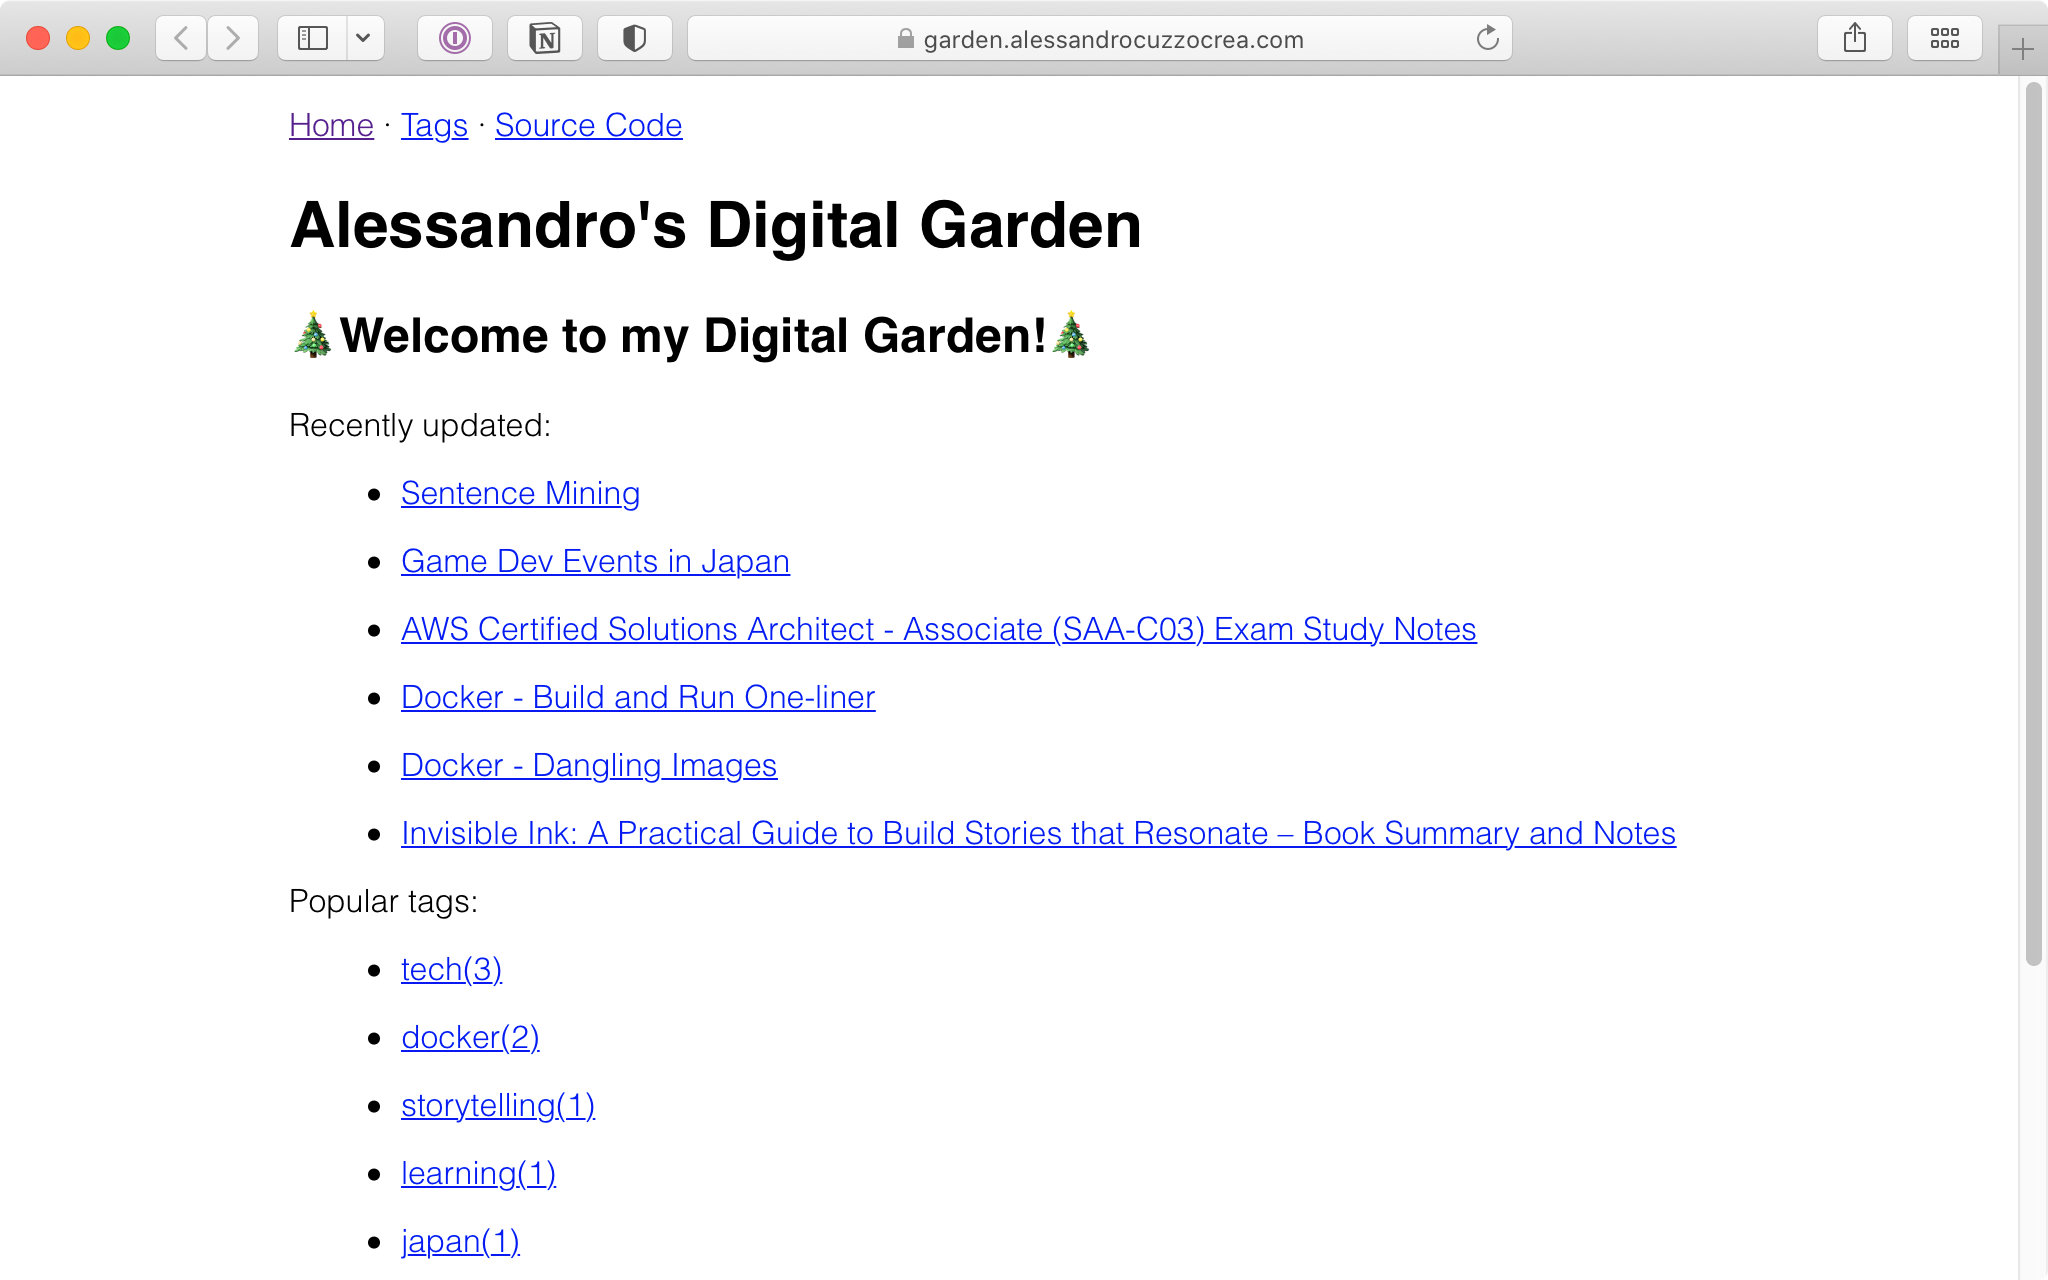 Alessandro Cuzzocrea's digital garden home page